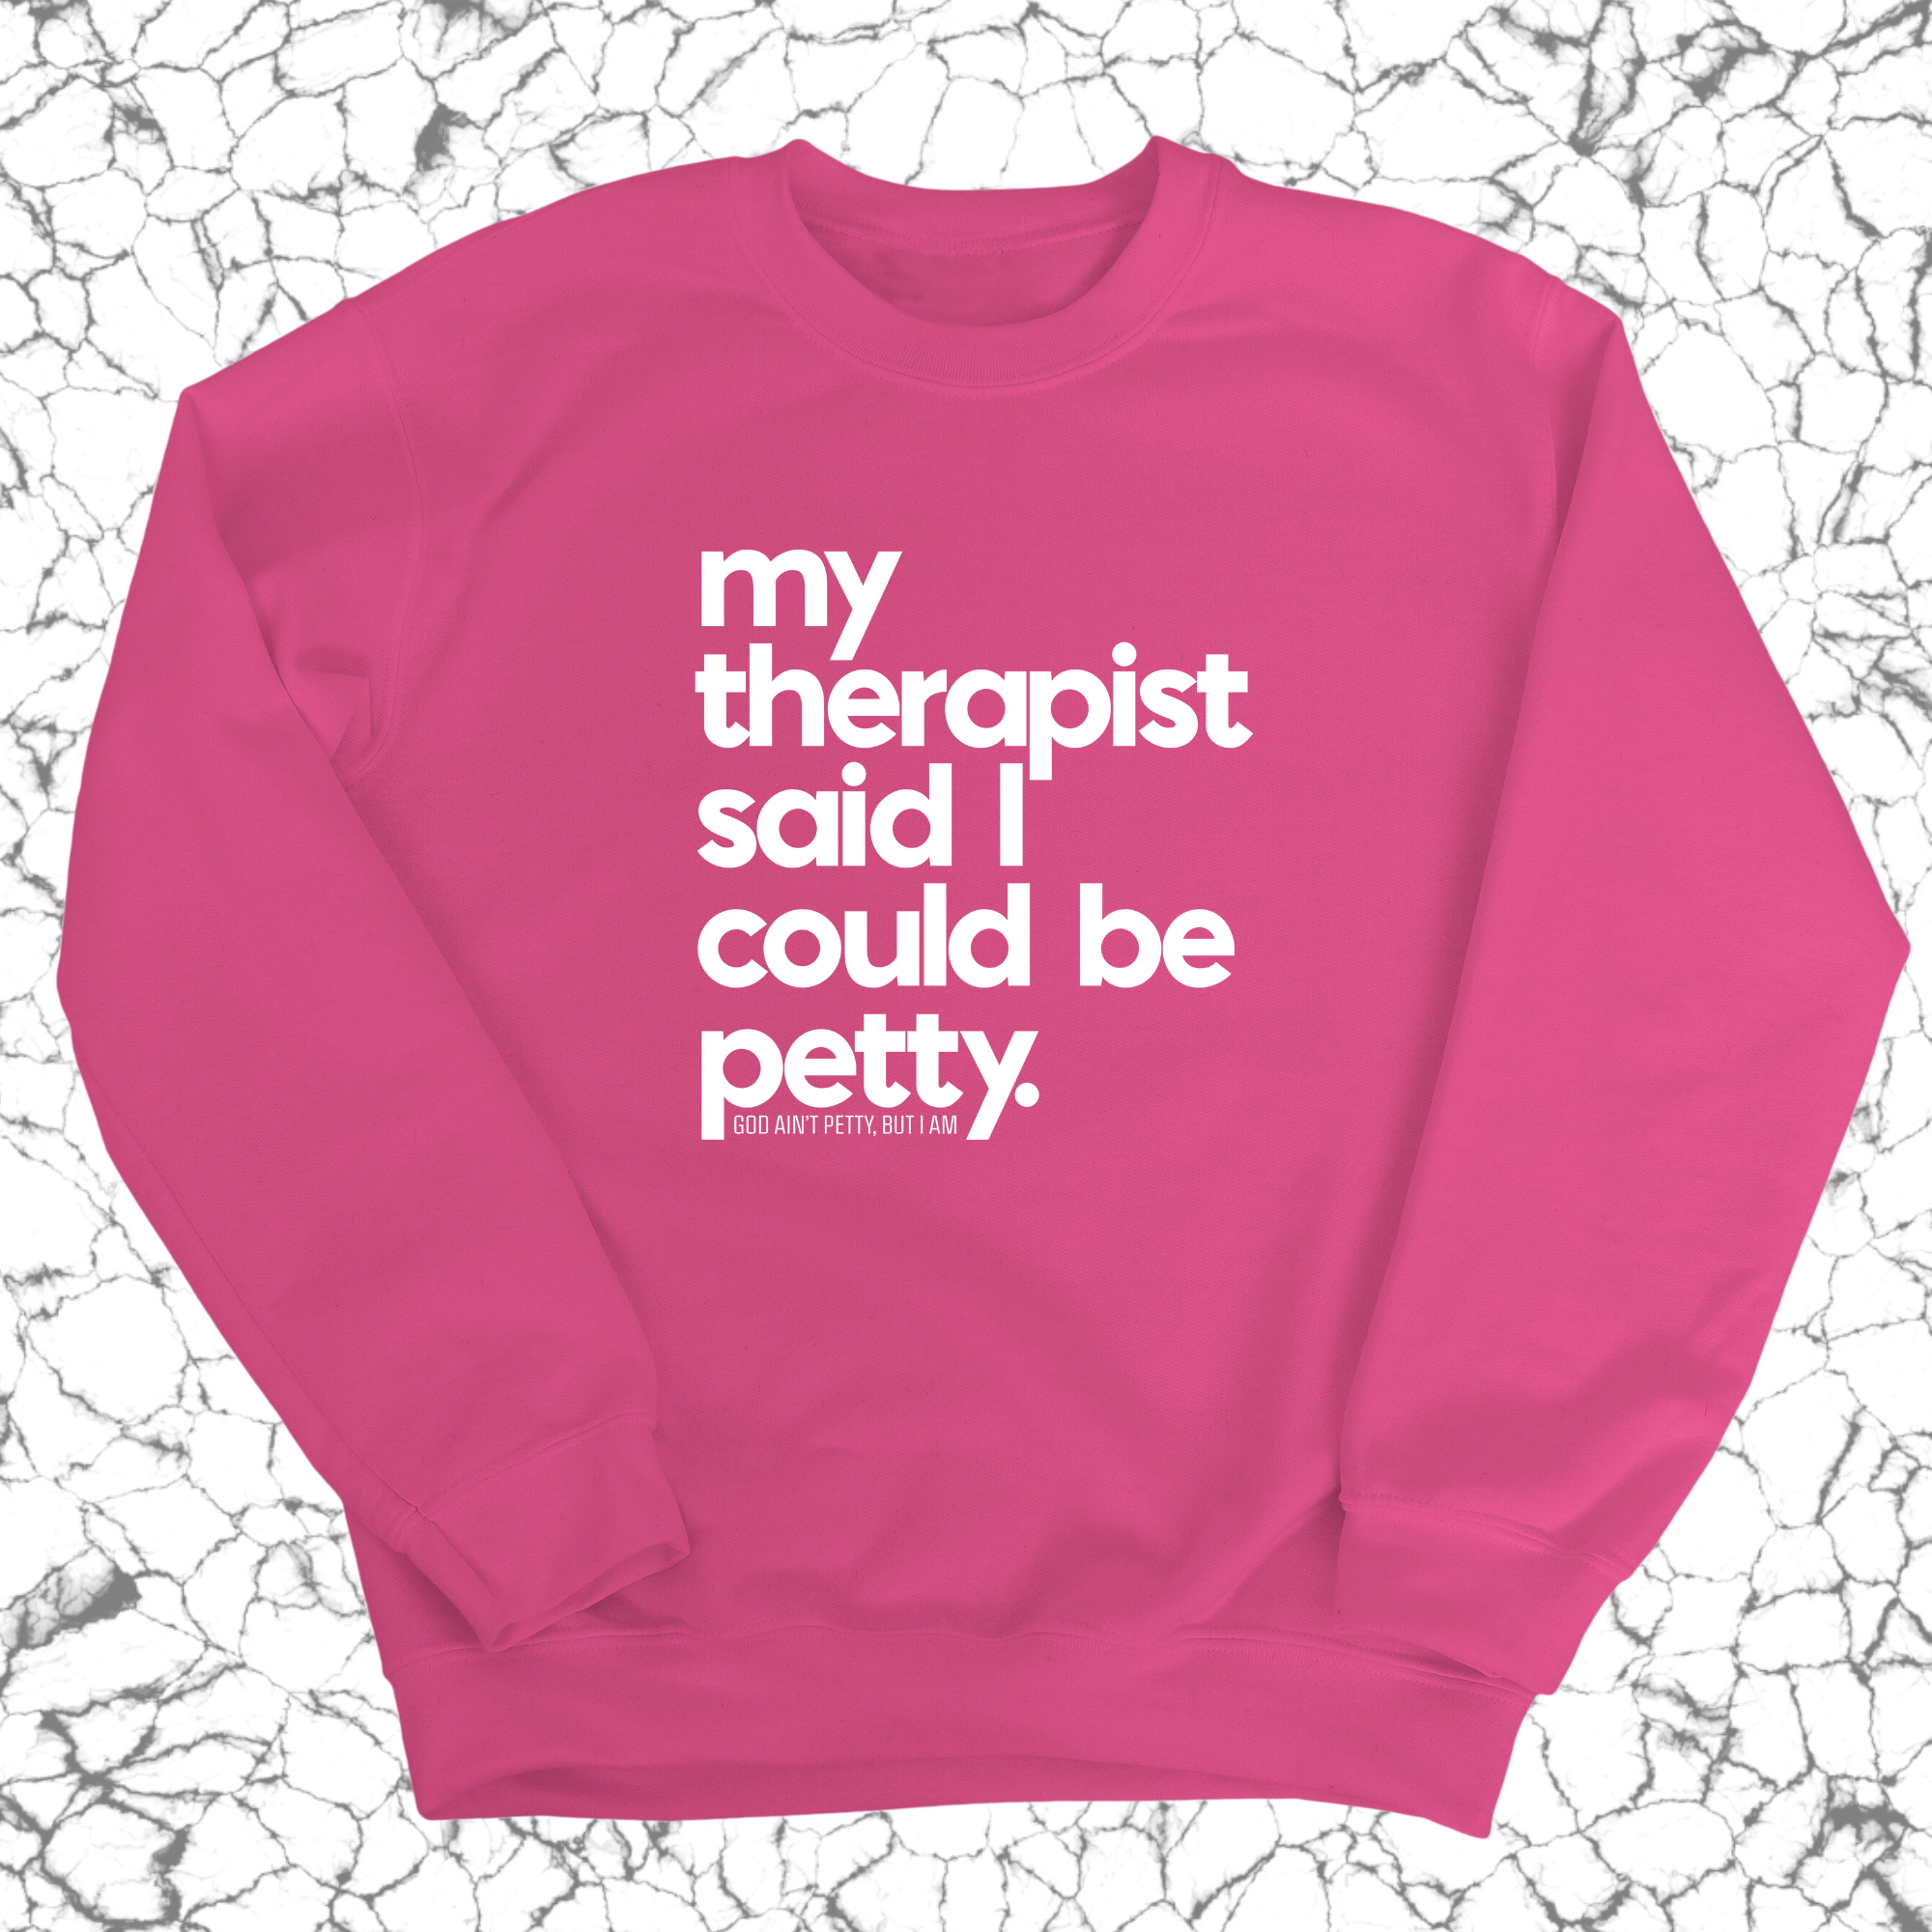 My Therapist said I could be Petty Unisex Sweatshirt-Sweatshirt-The Original God Ain't Petty But I Am